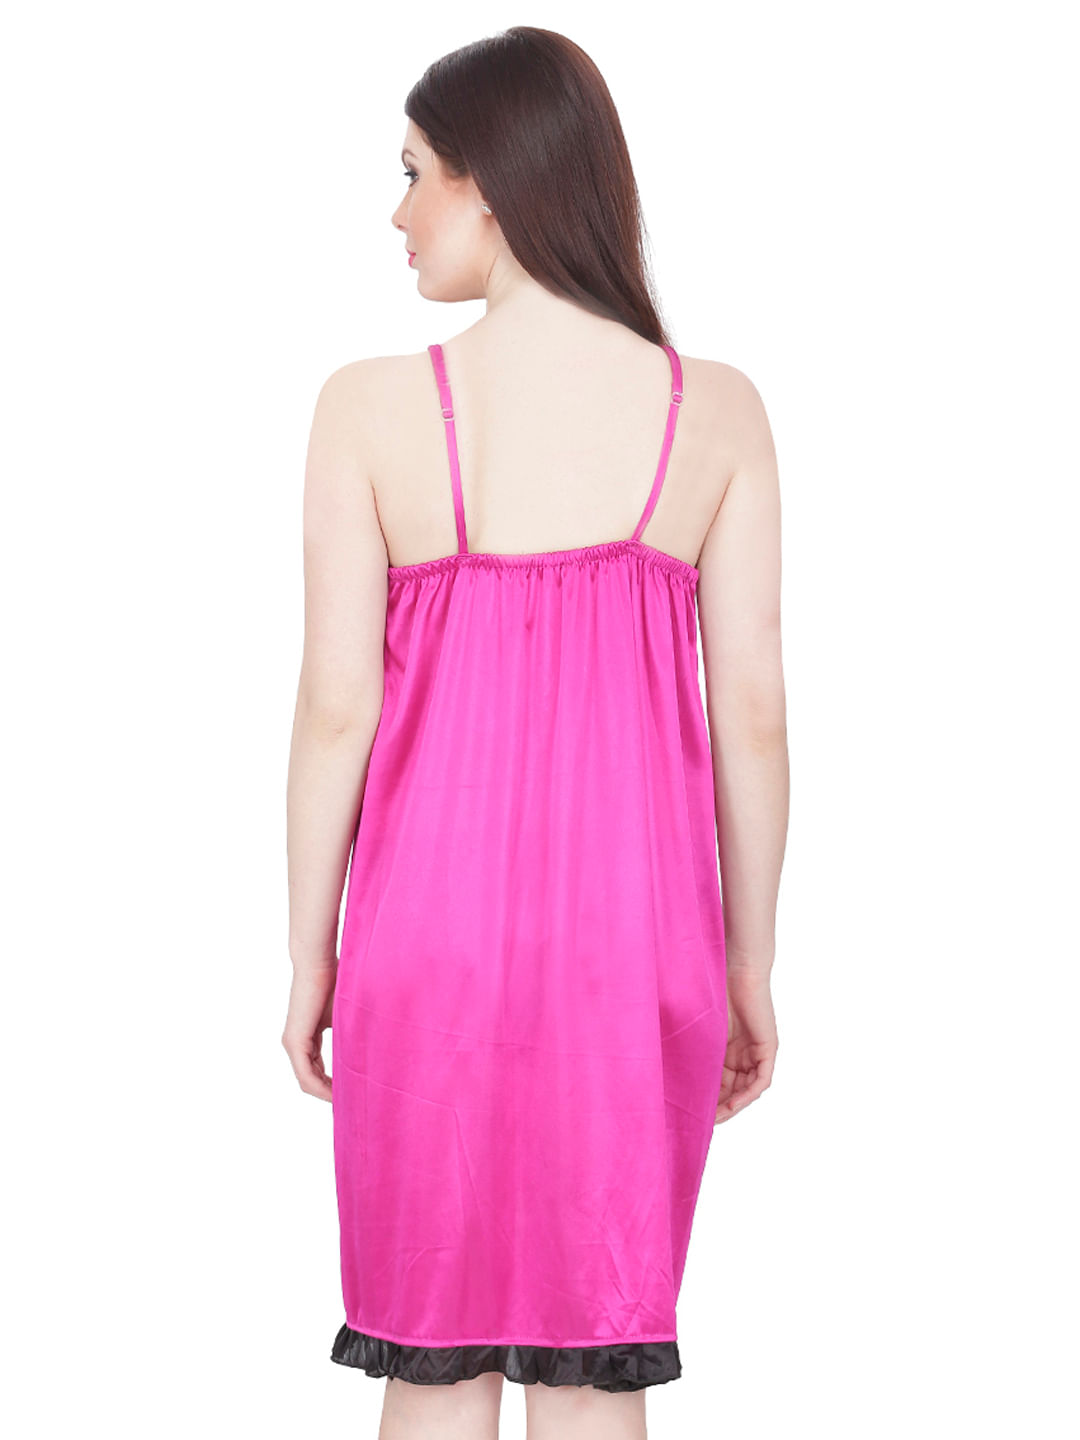 Satin Babydoll Dress (Pink, Free Size)